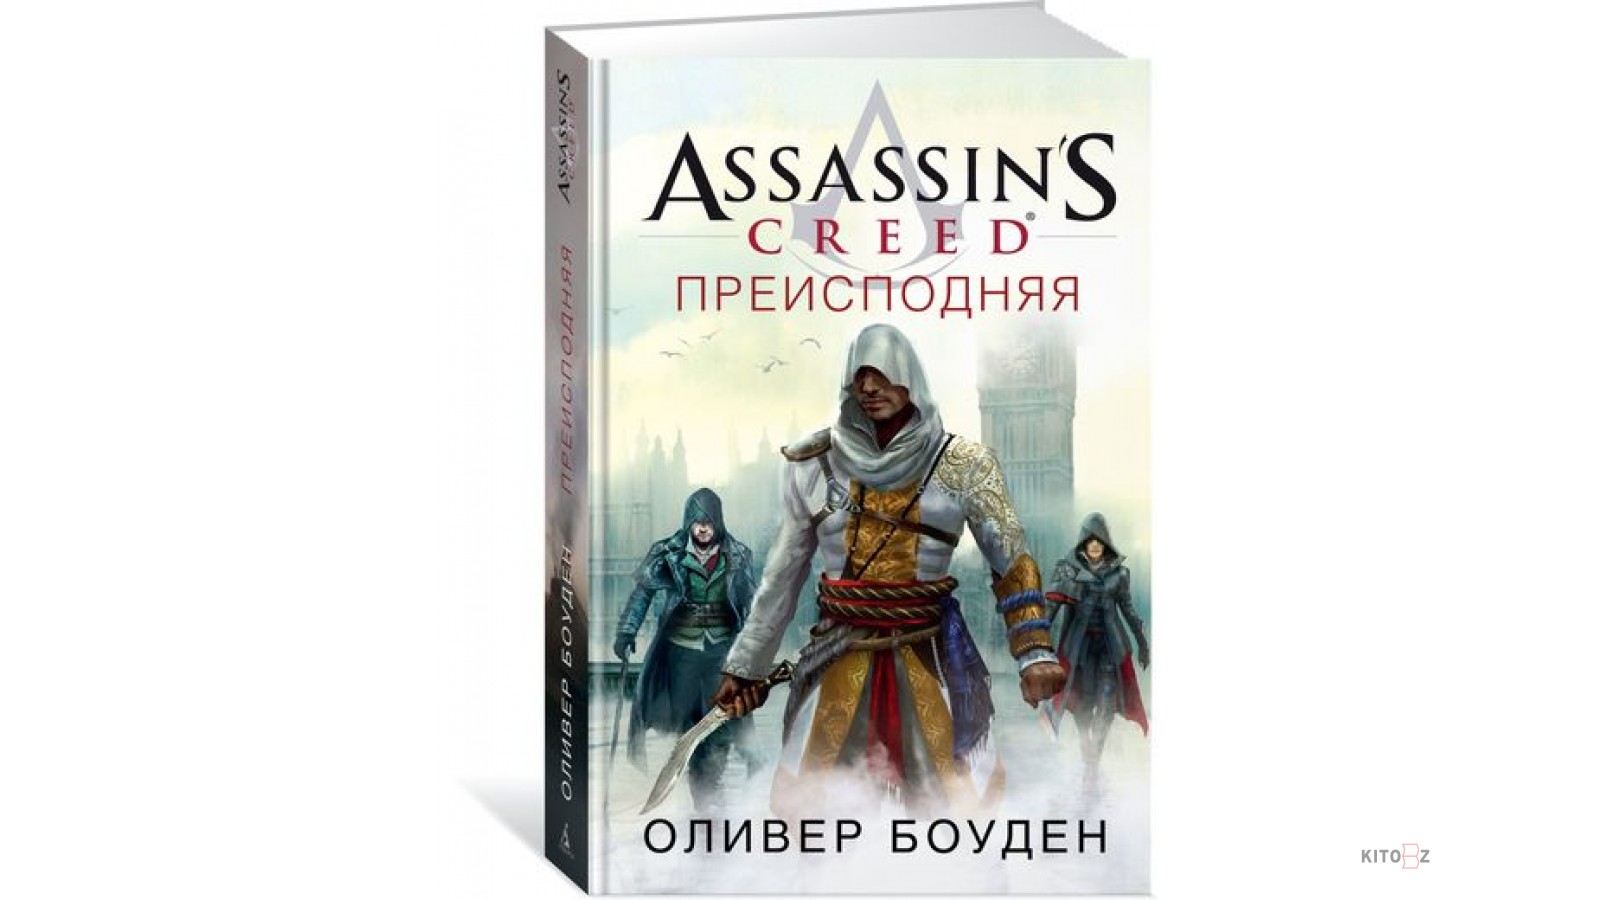 Книга мастер ассасин. Оливер Боуден. Assassin’s Creed Оливер Боуден книга. Ассасин братство книга. Оливер Боуден фото.